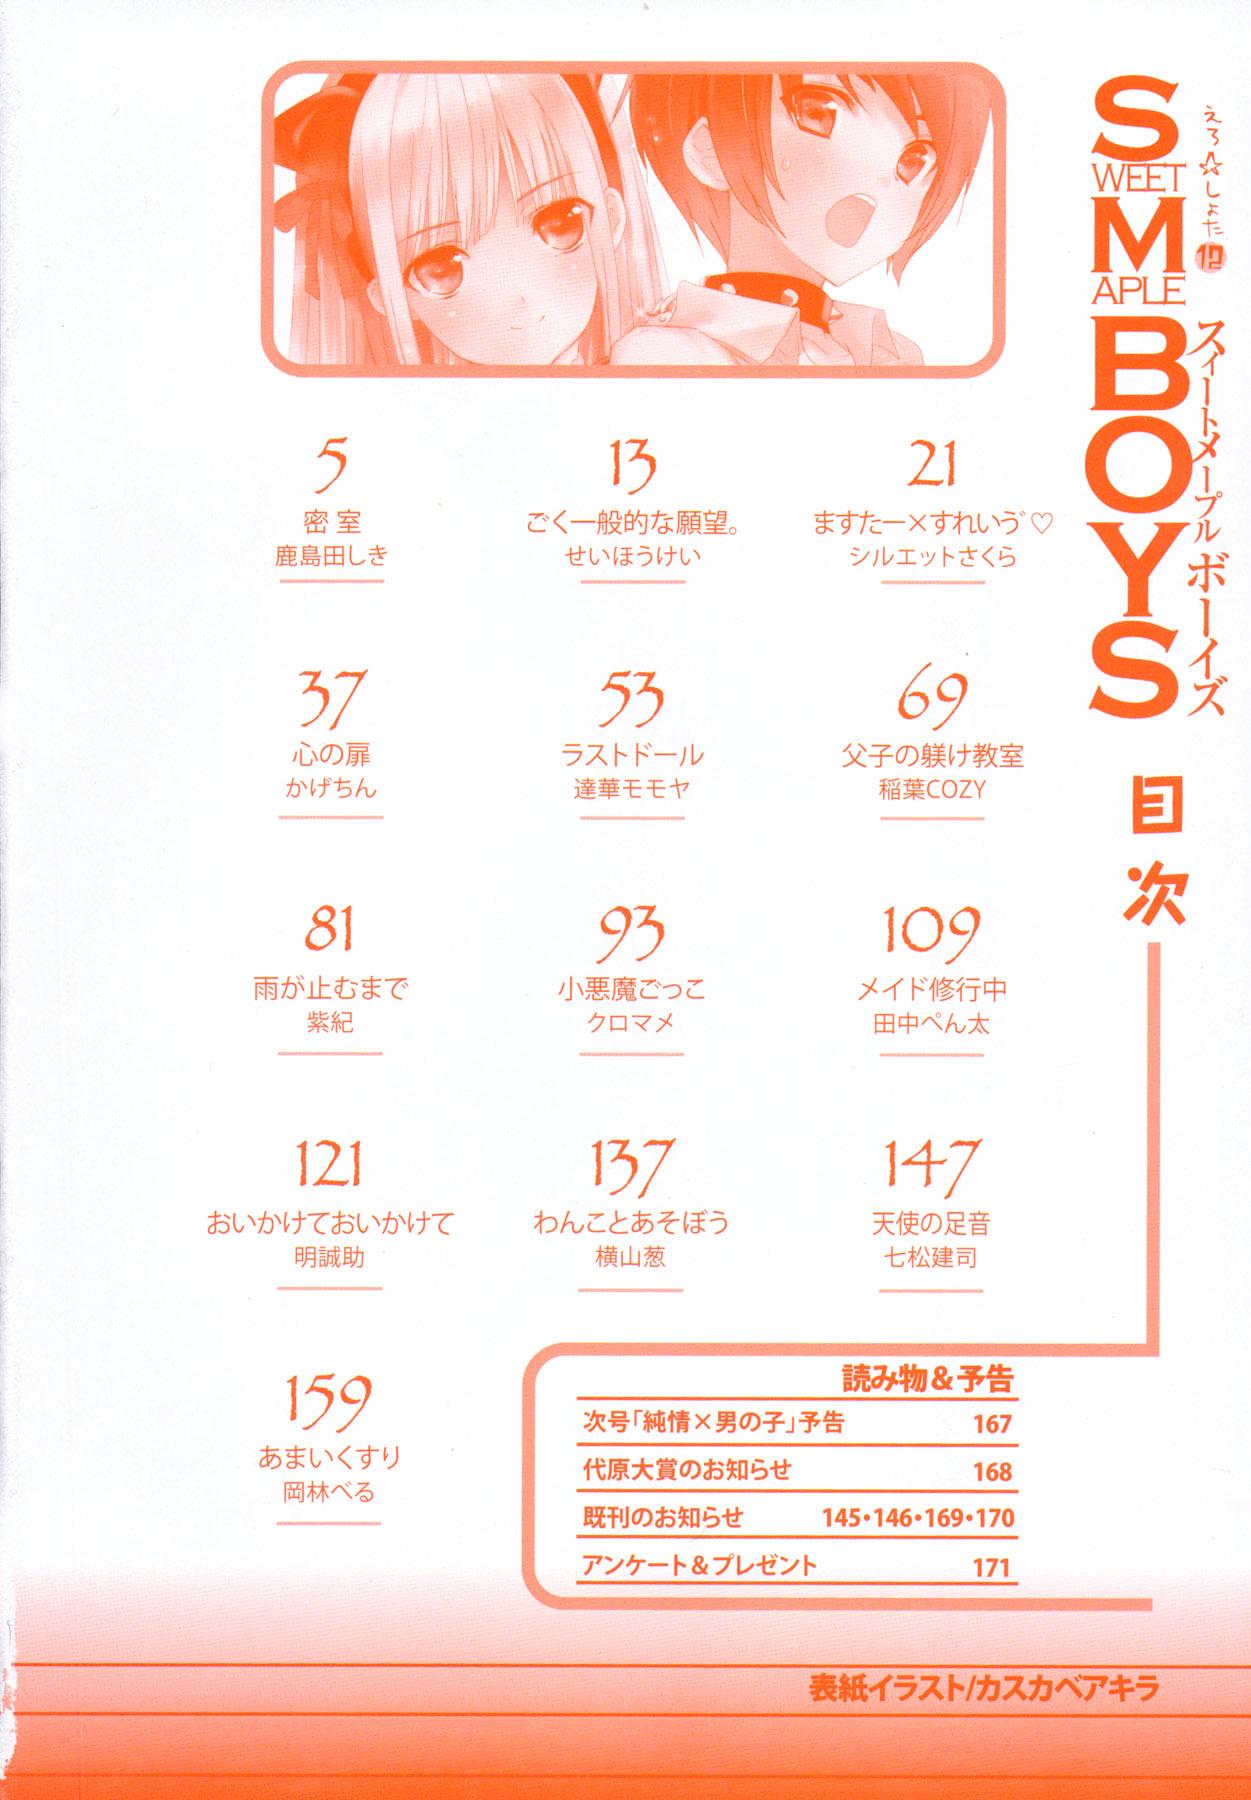 Negra Ero Shota 12 - Sweet Maple Boys Gay Friend - Page 3